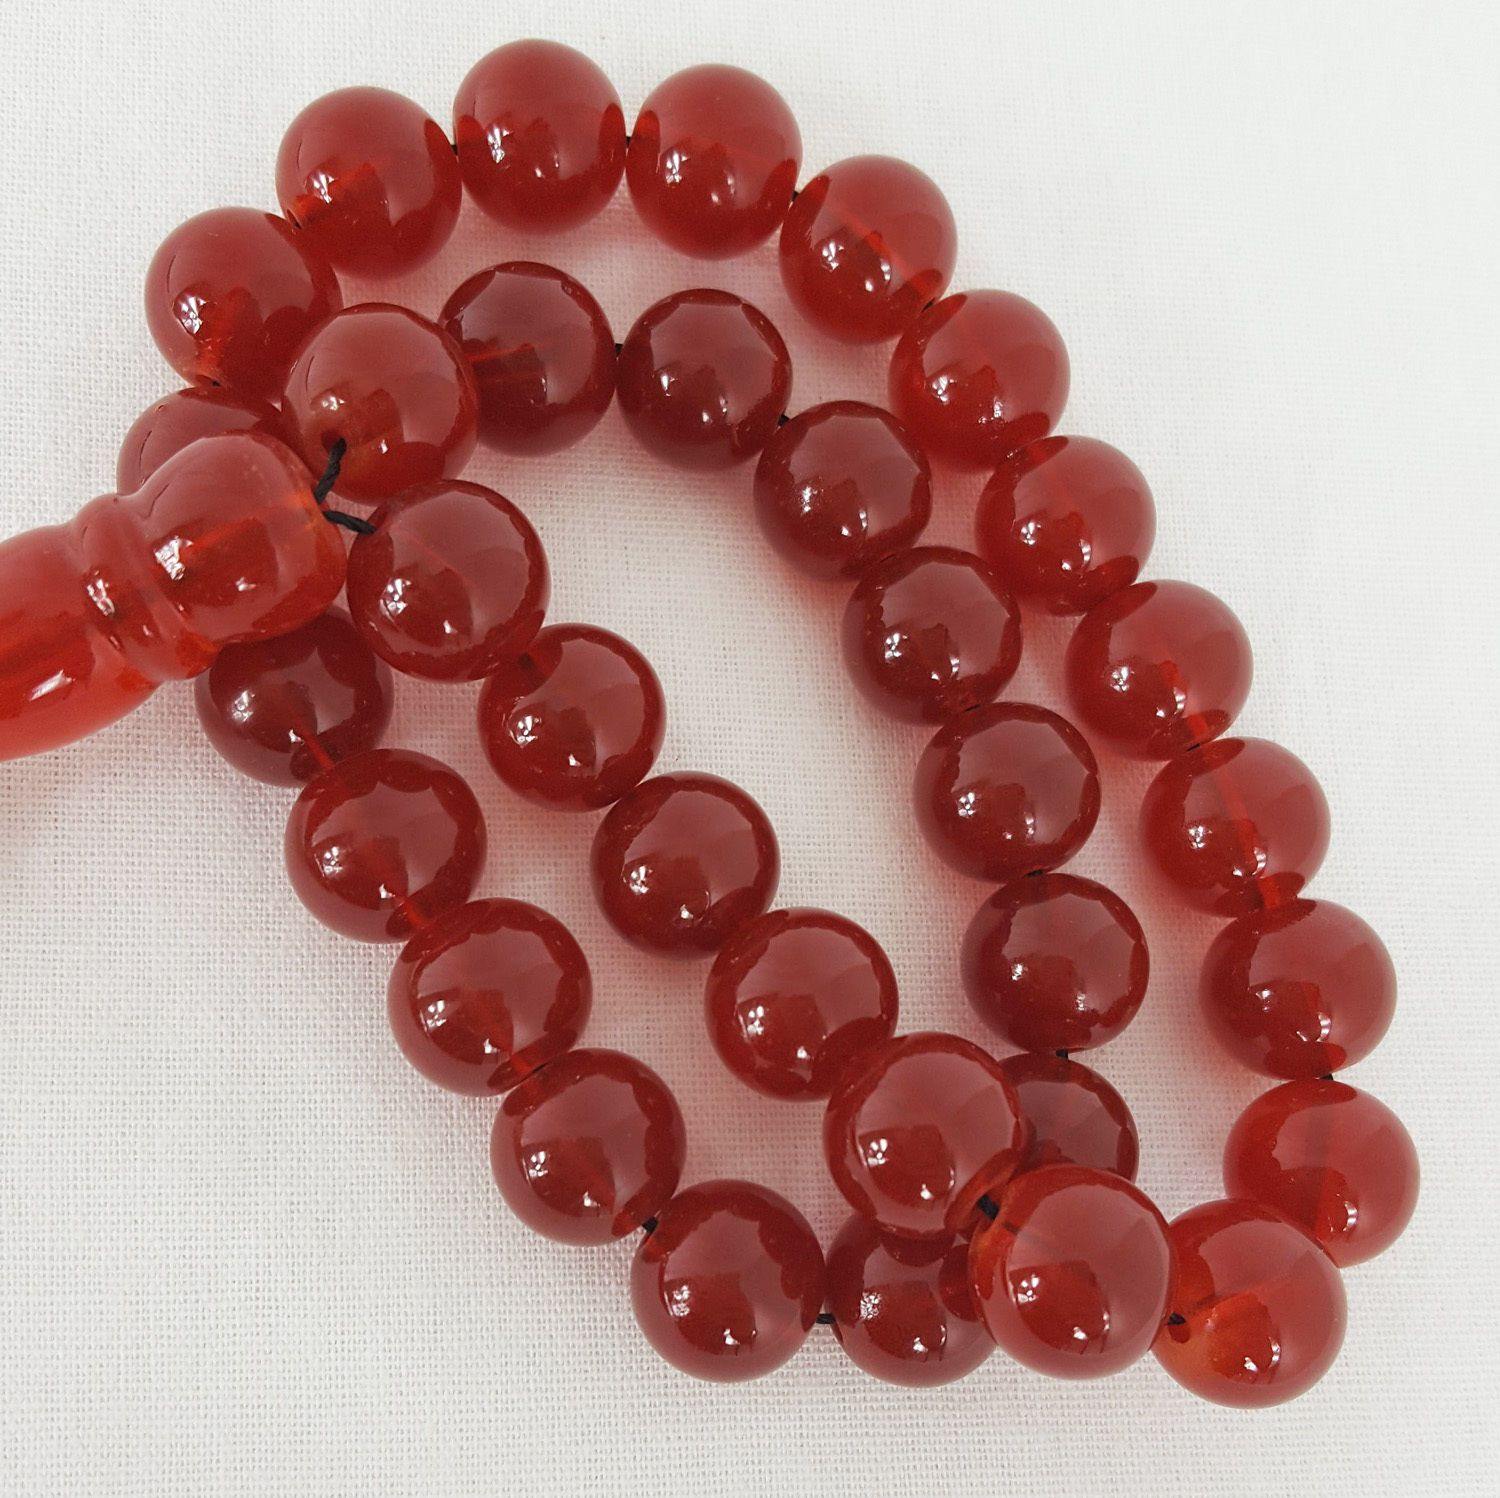 Islamic Salah 12mm Black/Red Gemstone Prayer Beads 33 Misbaha Tasbih Sibha - Arabian Shopping Zone